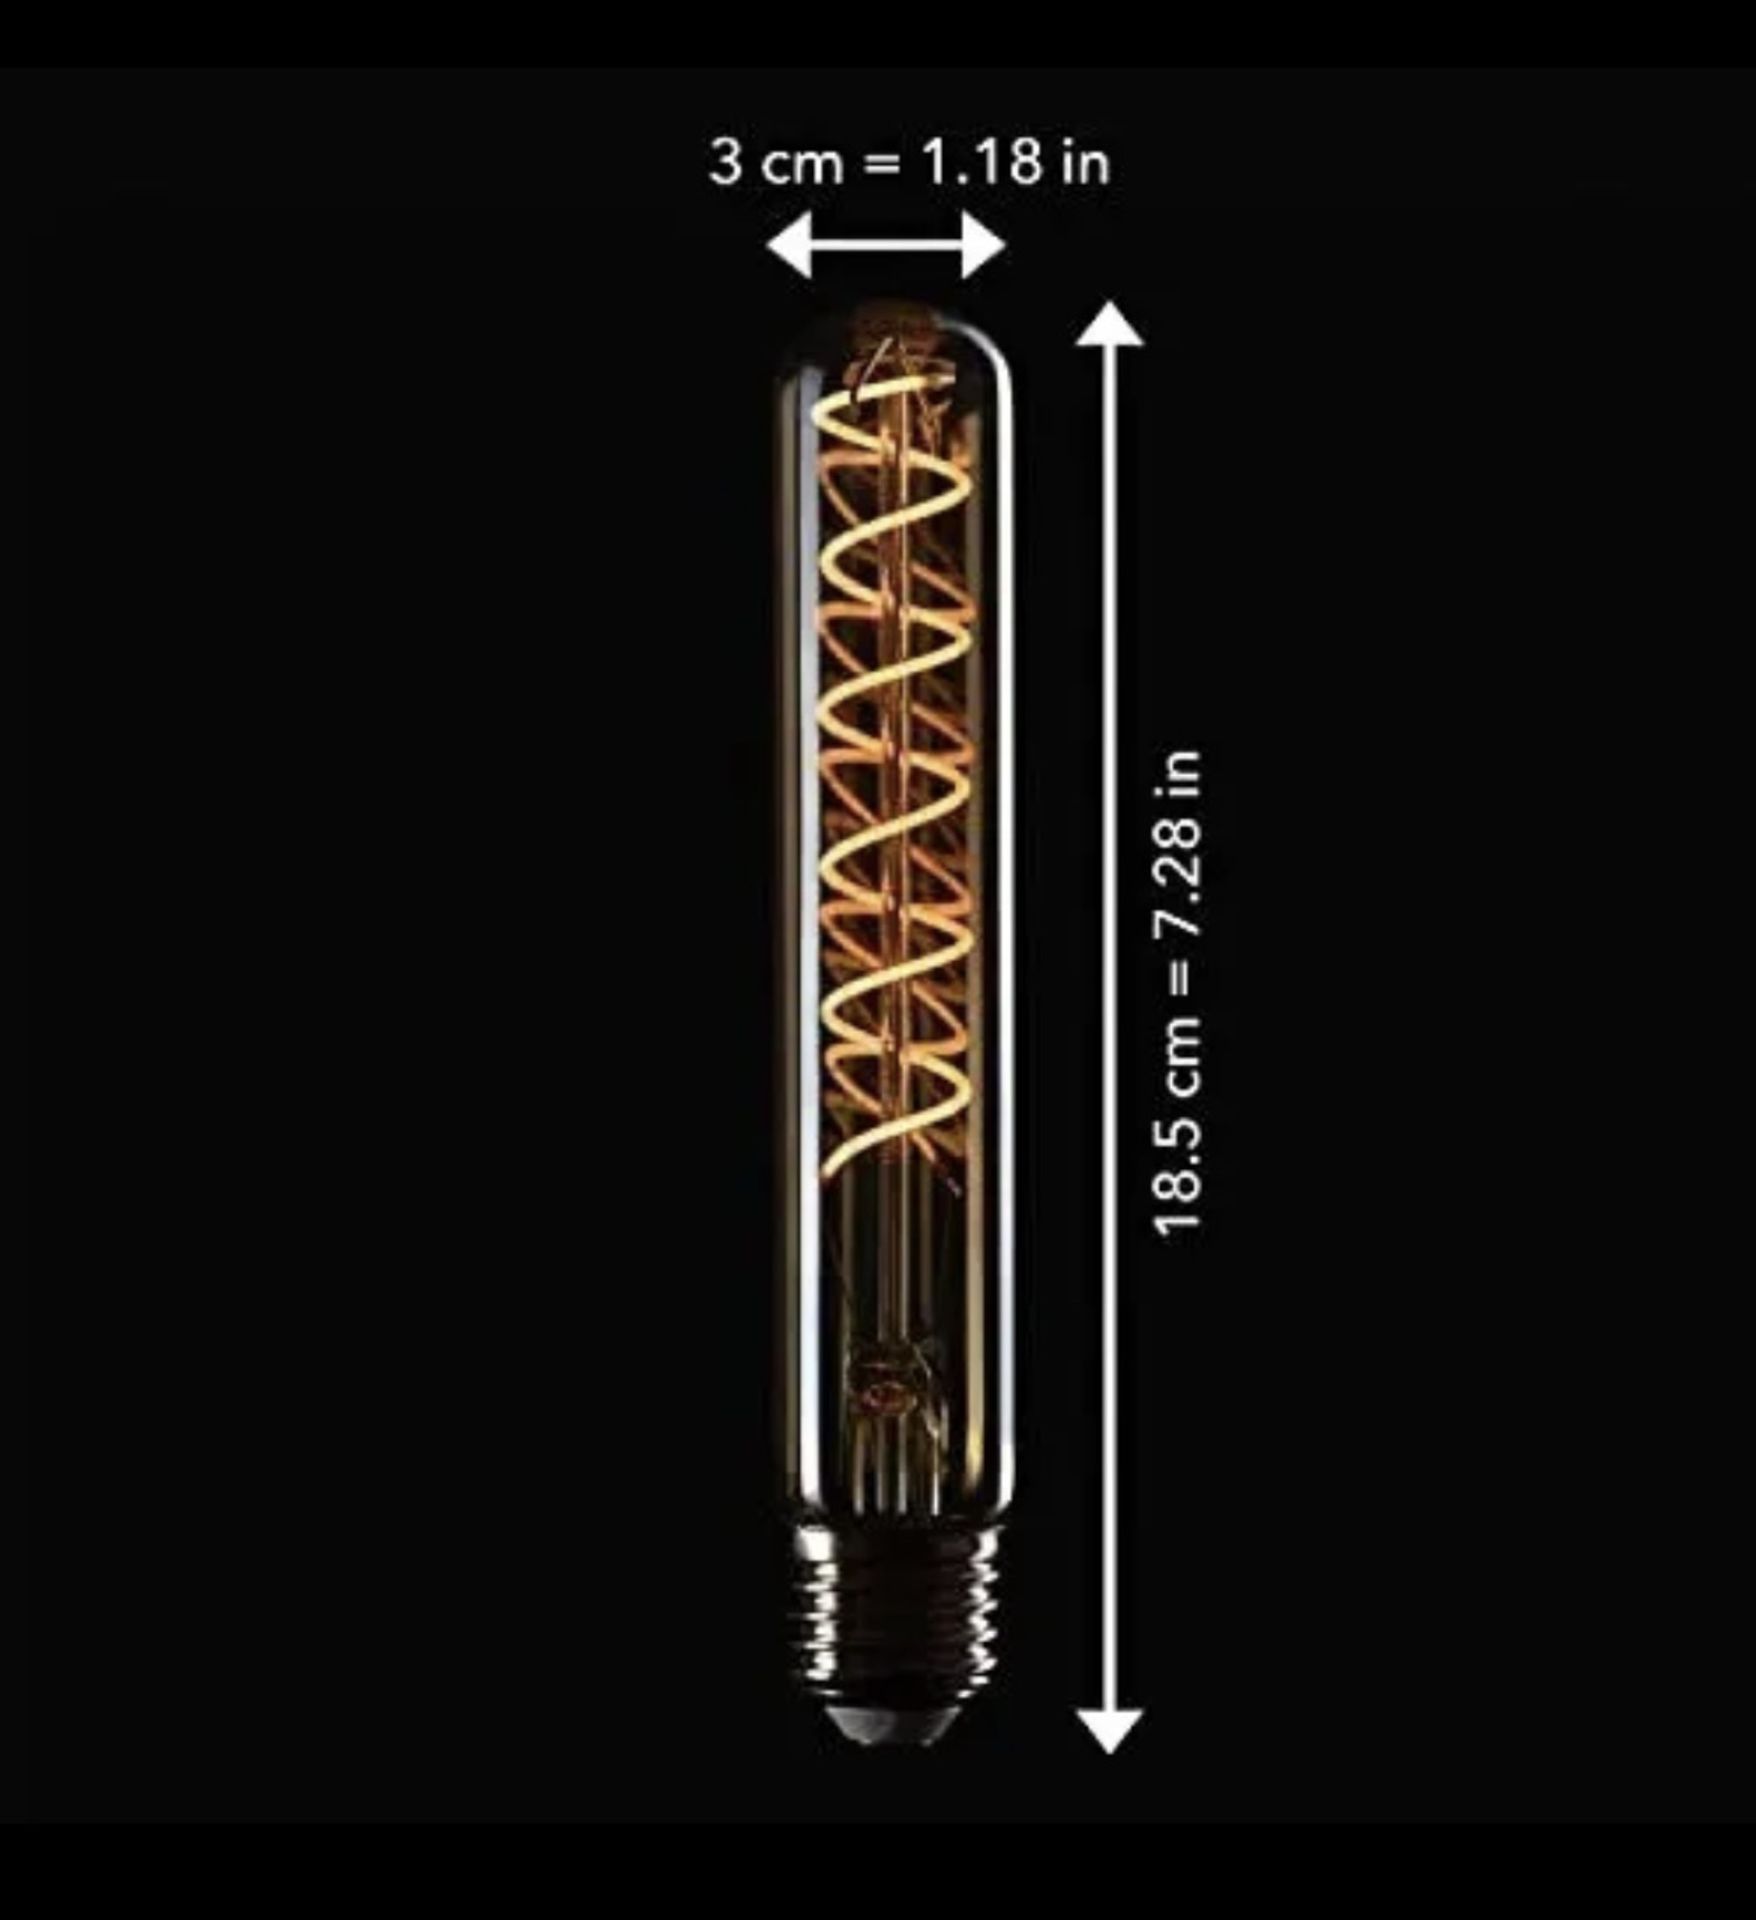 6 x CROWN LED Edison Flat Pipe Lightbulb 4W/40W Warm White - NEW & BOXED - BIG RRP! - Image 6 of 8